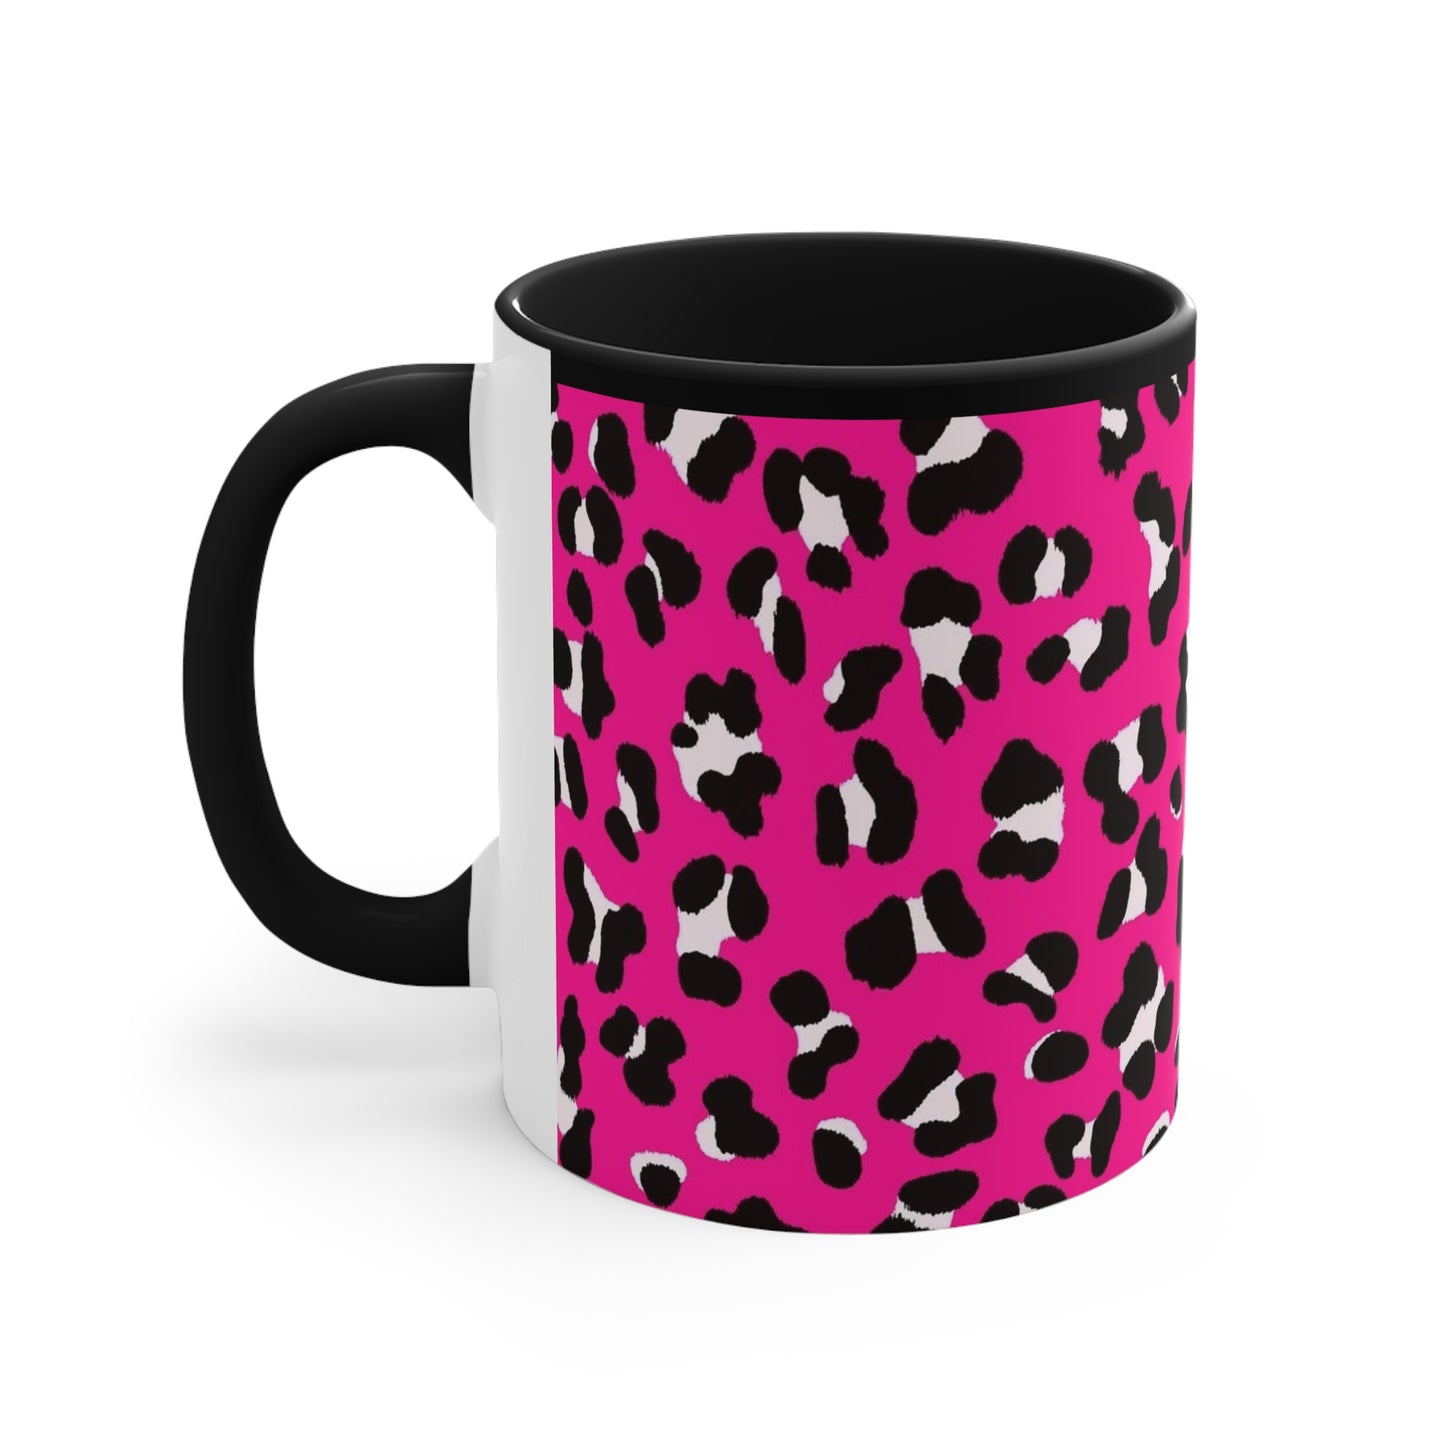 😇Angel Sevenn Coffee ☕️ Mug